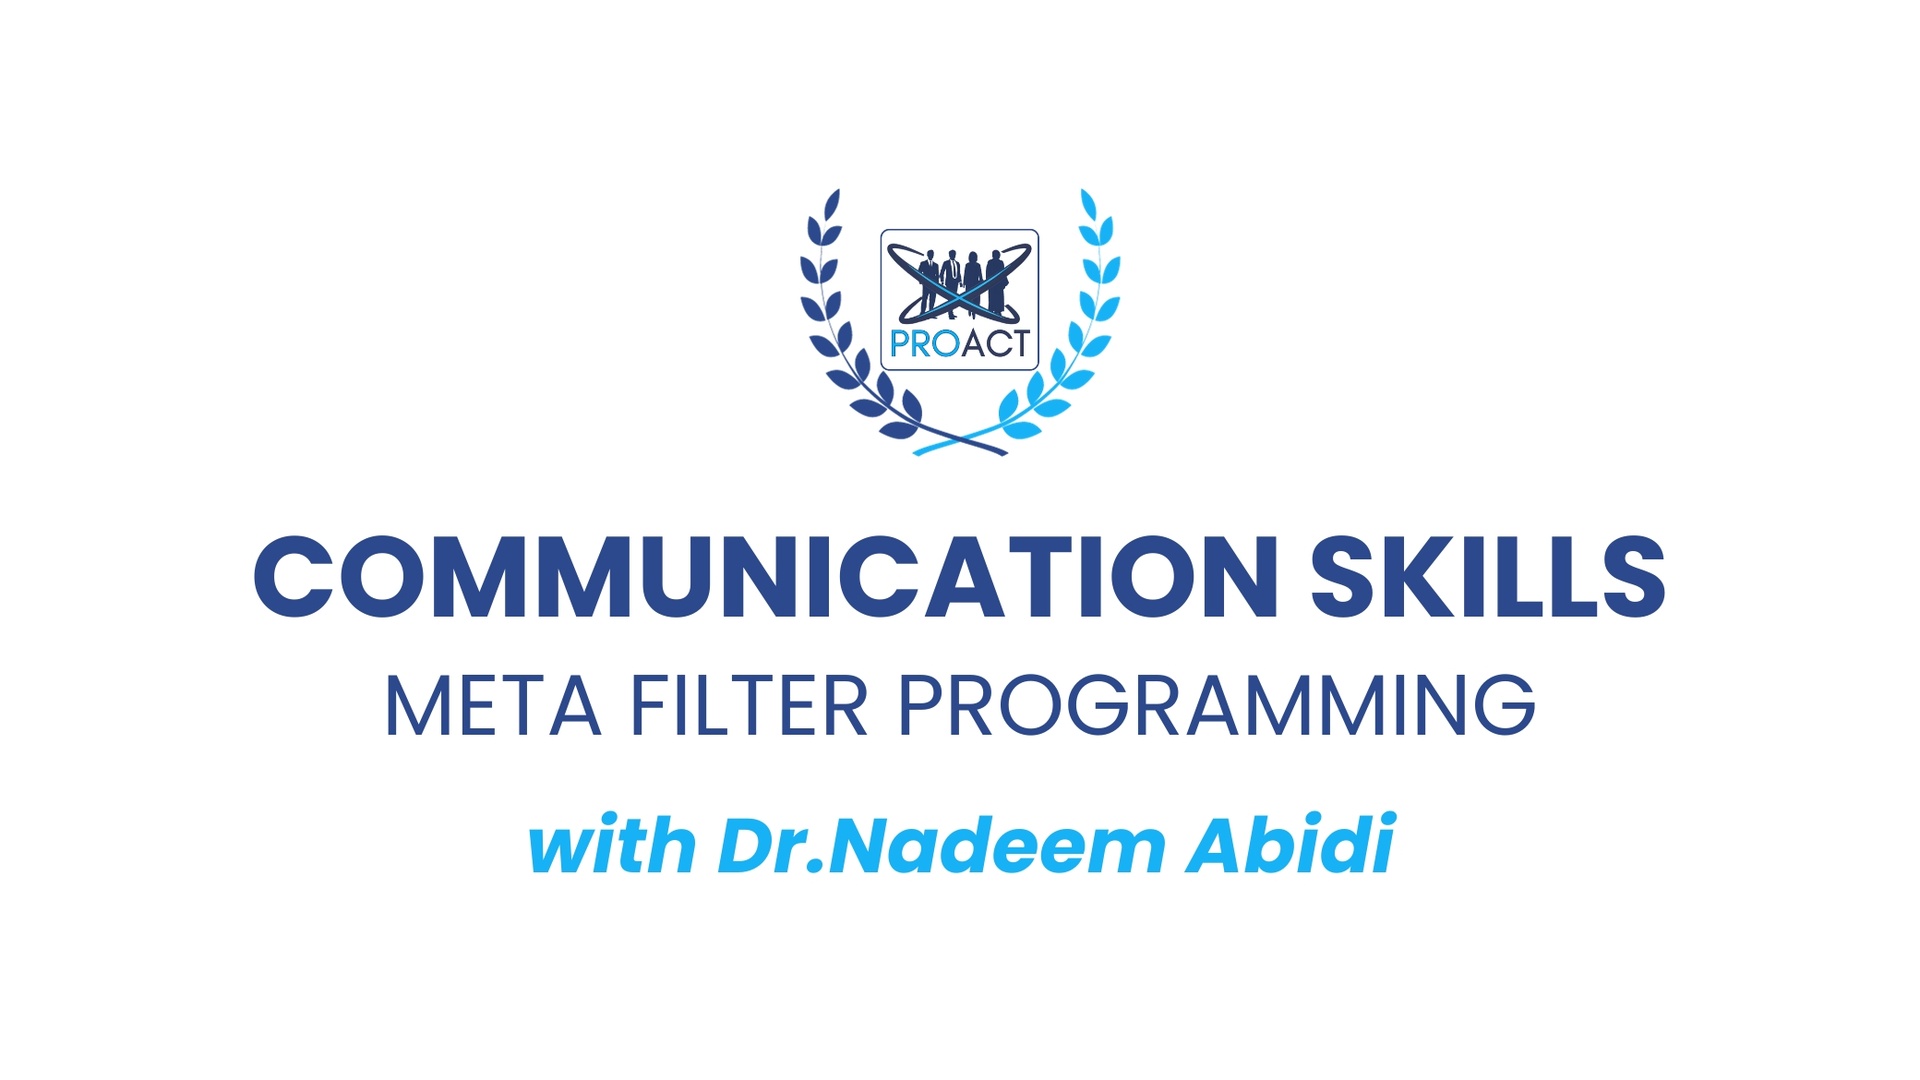 COMMUNICATION SKILLS META FILTER PROGRAMMING with Dr. NADEEM ABIDI